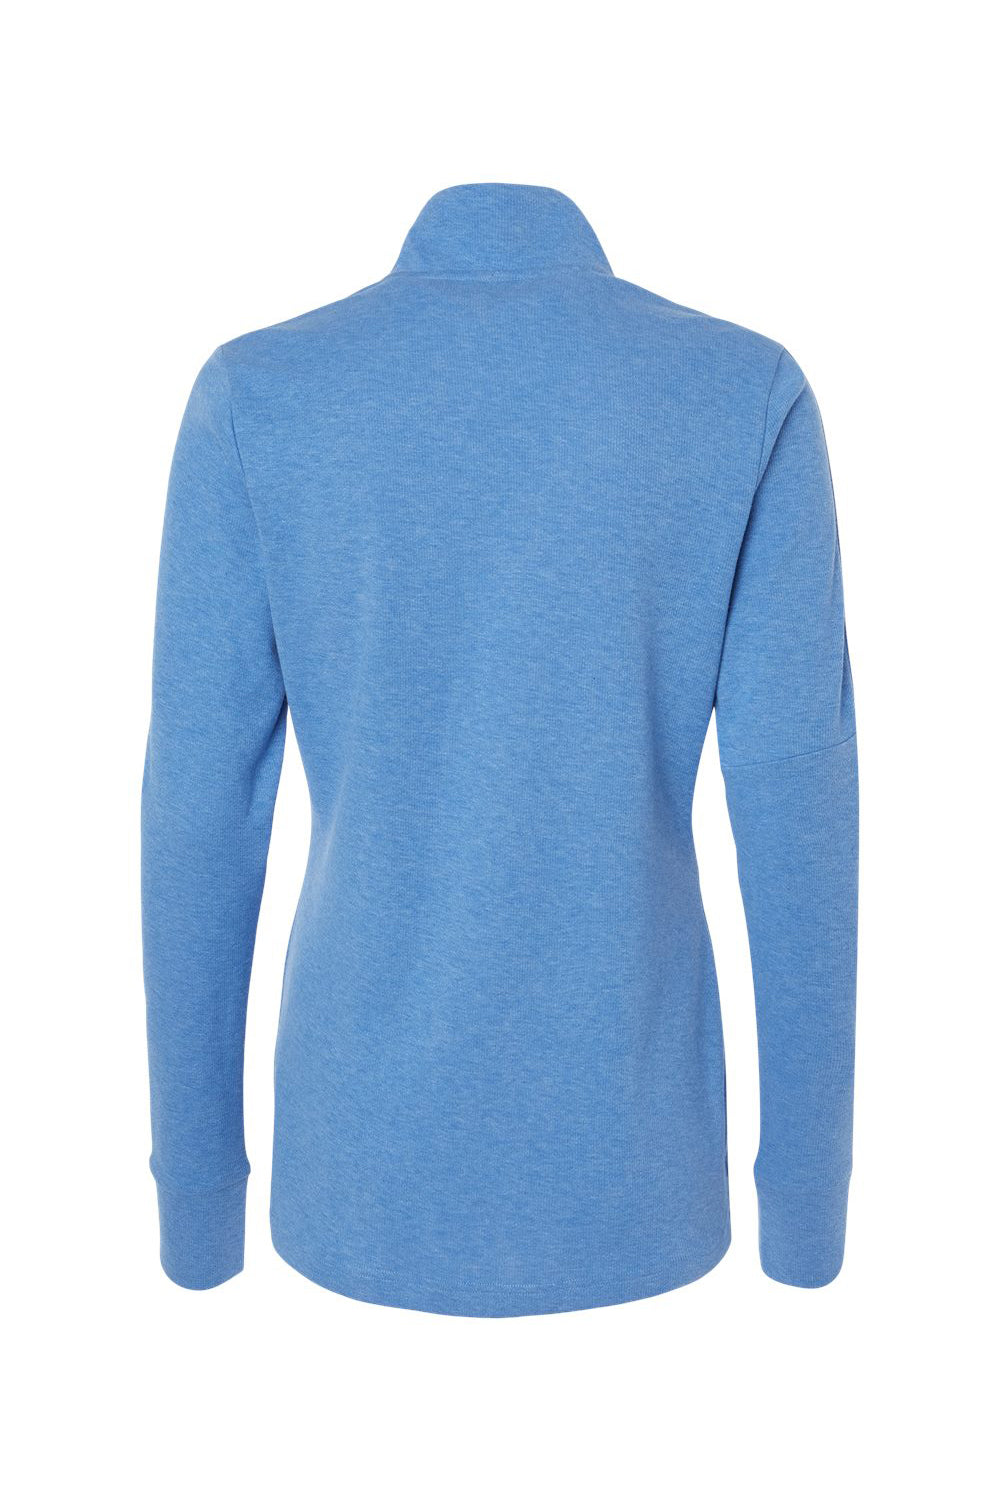 Adidas A555 Womens 3 Stripes 1/4 Zip Sweater Focus Blue Melange Flat Back